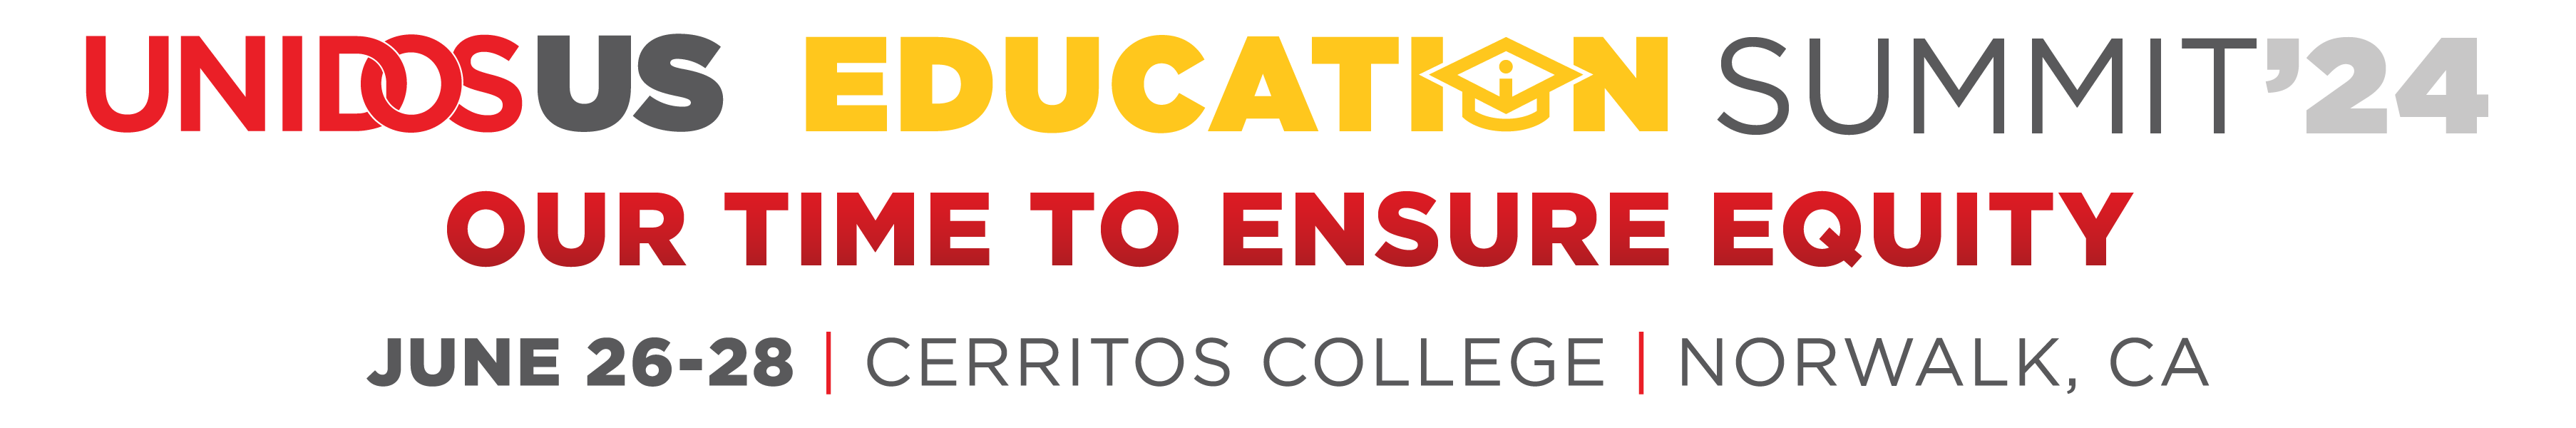 2024 UnidosUS Education Summit Brand